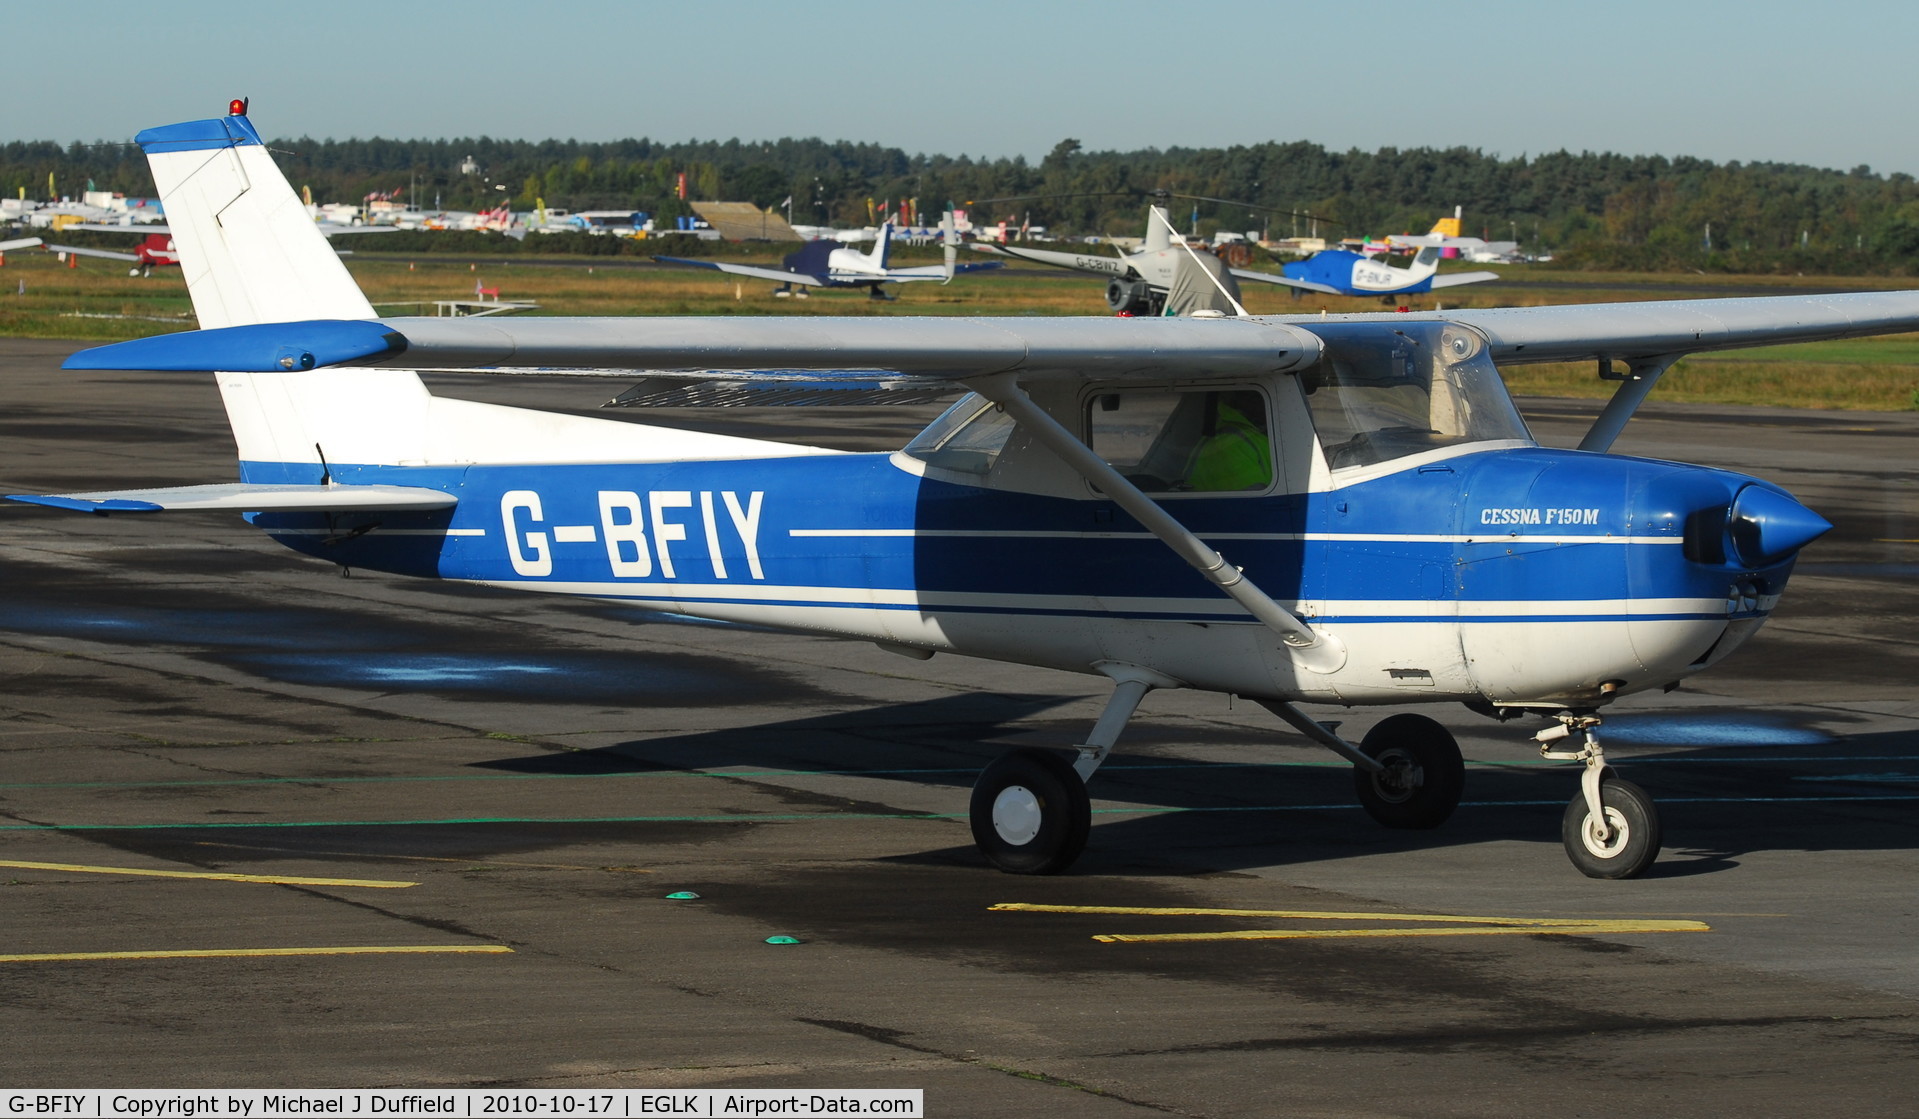 G-BFIY, 1977 Reims F150M C/N 1381, Cessna 150 seen at Blackbushe on 17th October 2010